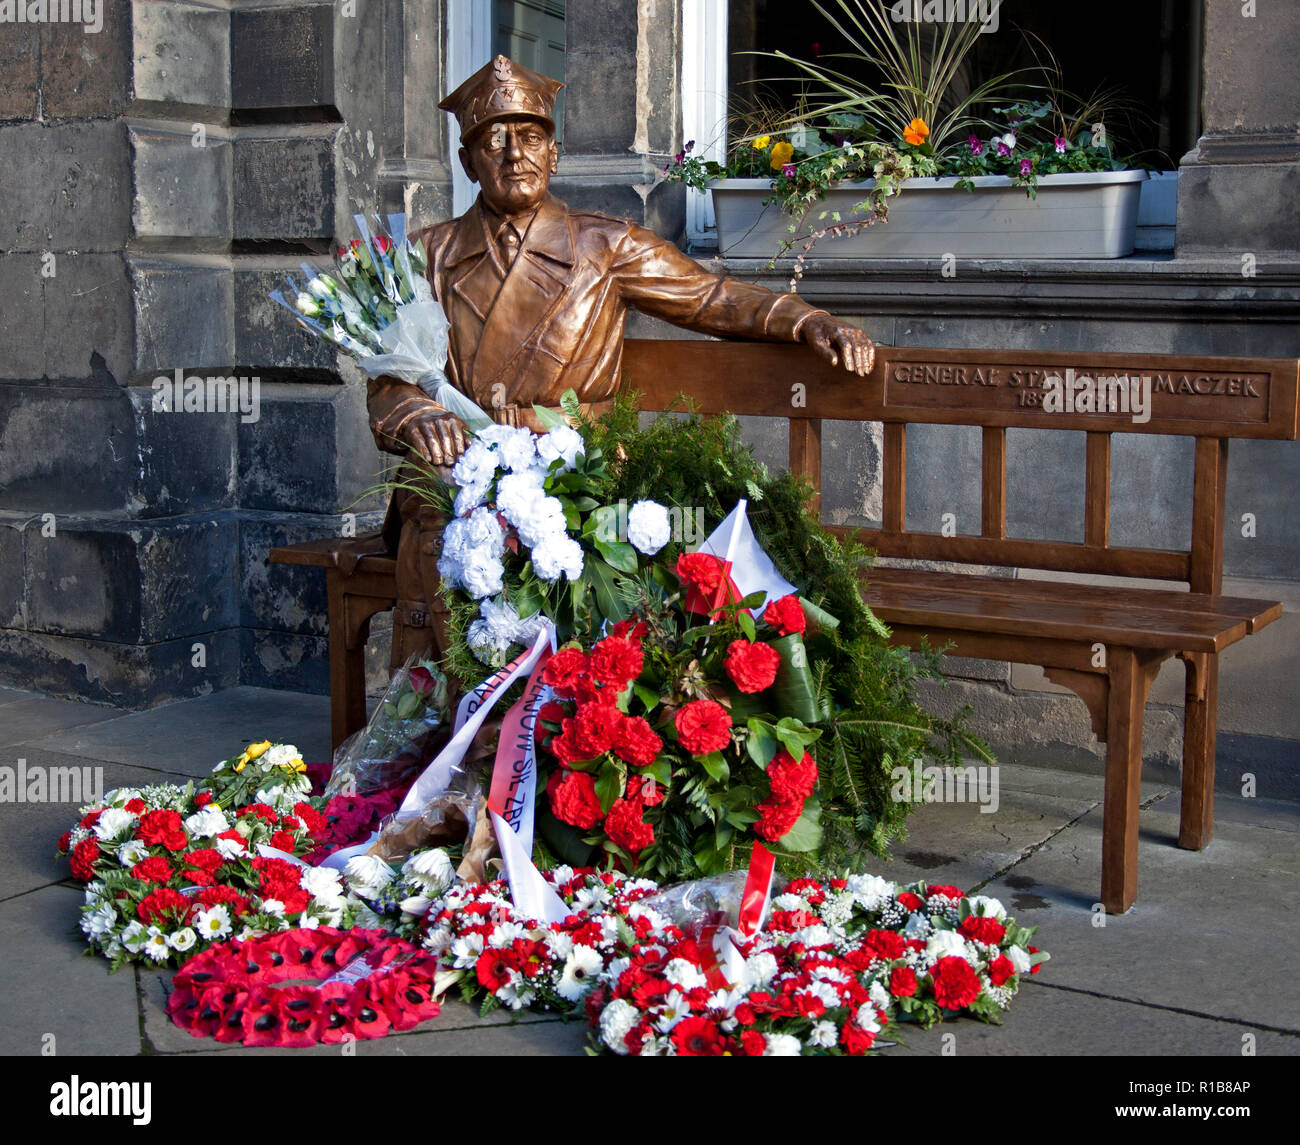 General Stanislaw Maczek statue, Polish Tank Commander of World War 11 Stock Photo